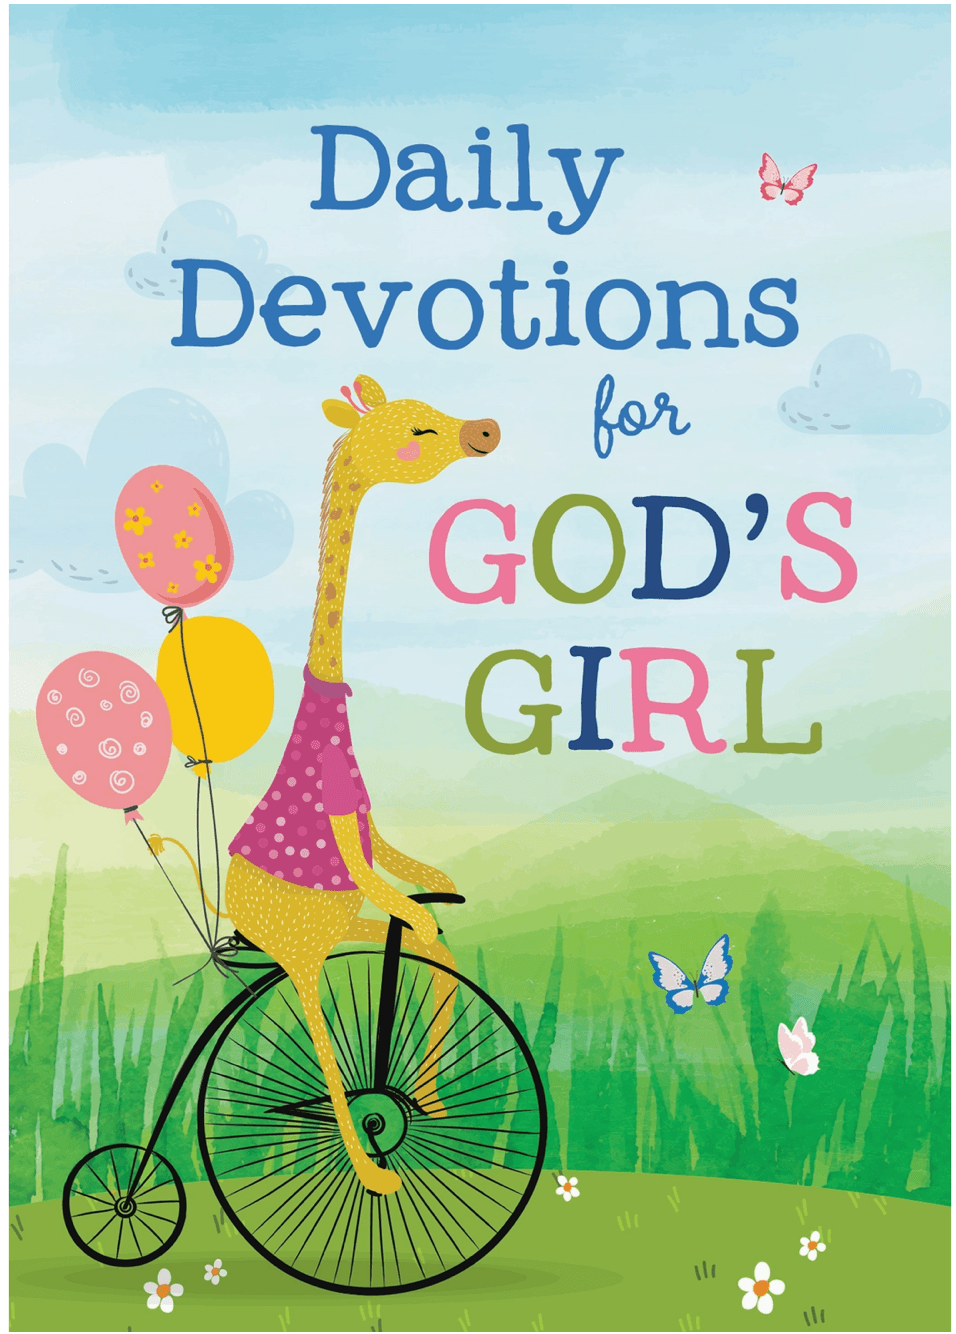 Daily Devotions for God's Girl